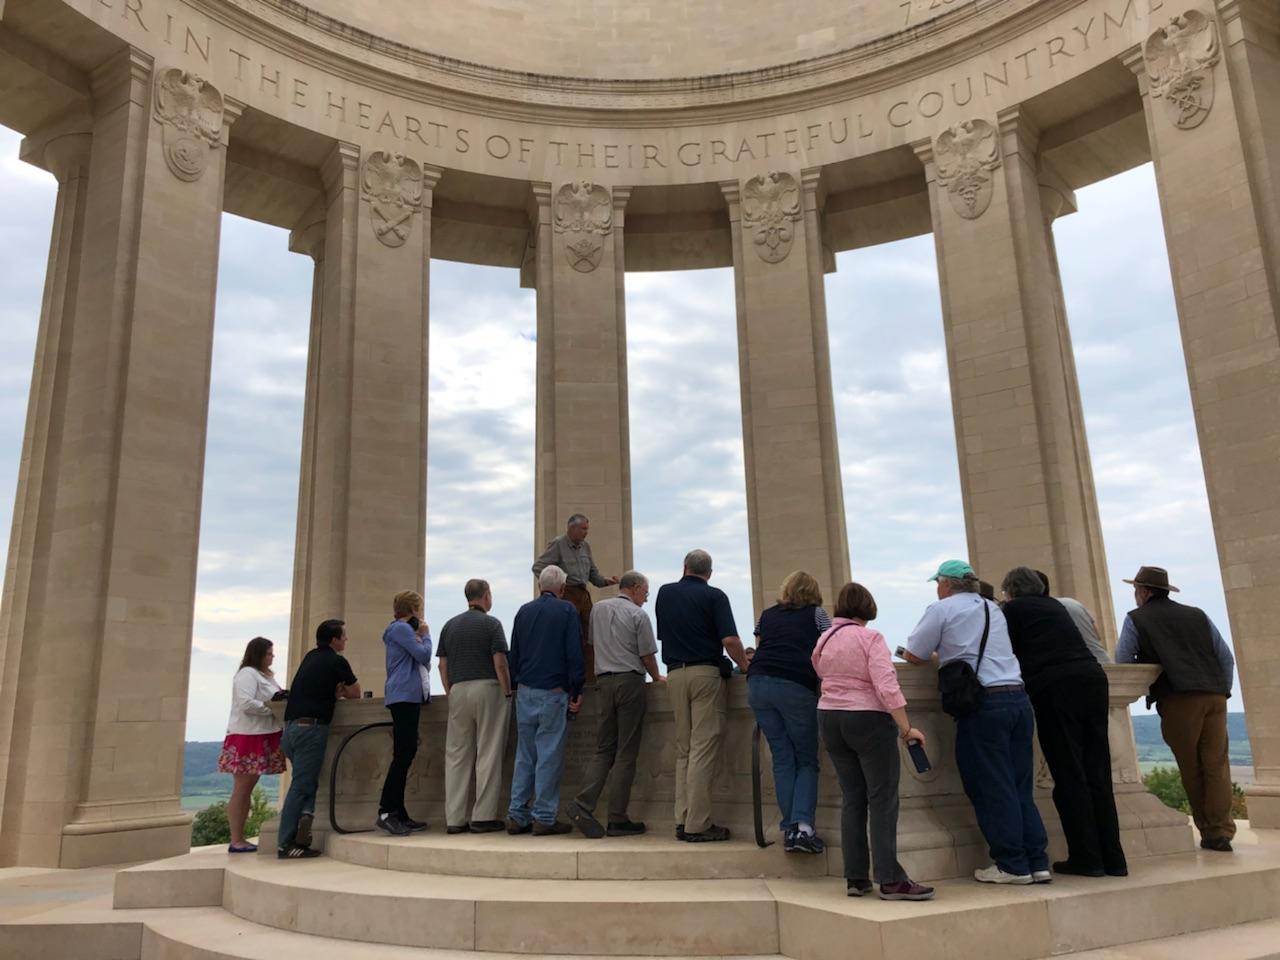 Tour group standing inside the circular pillar monument